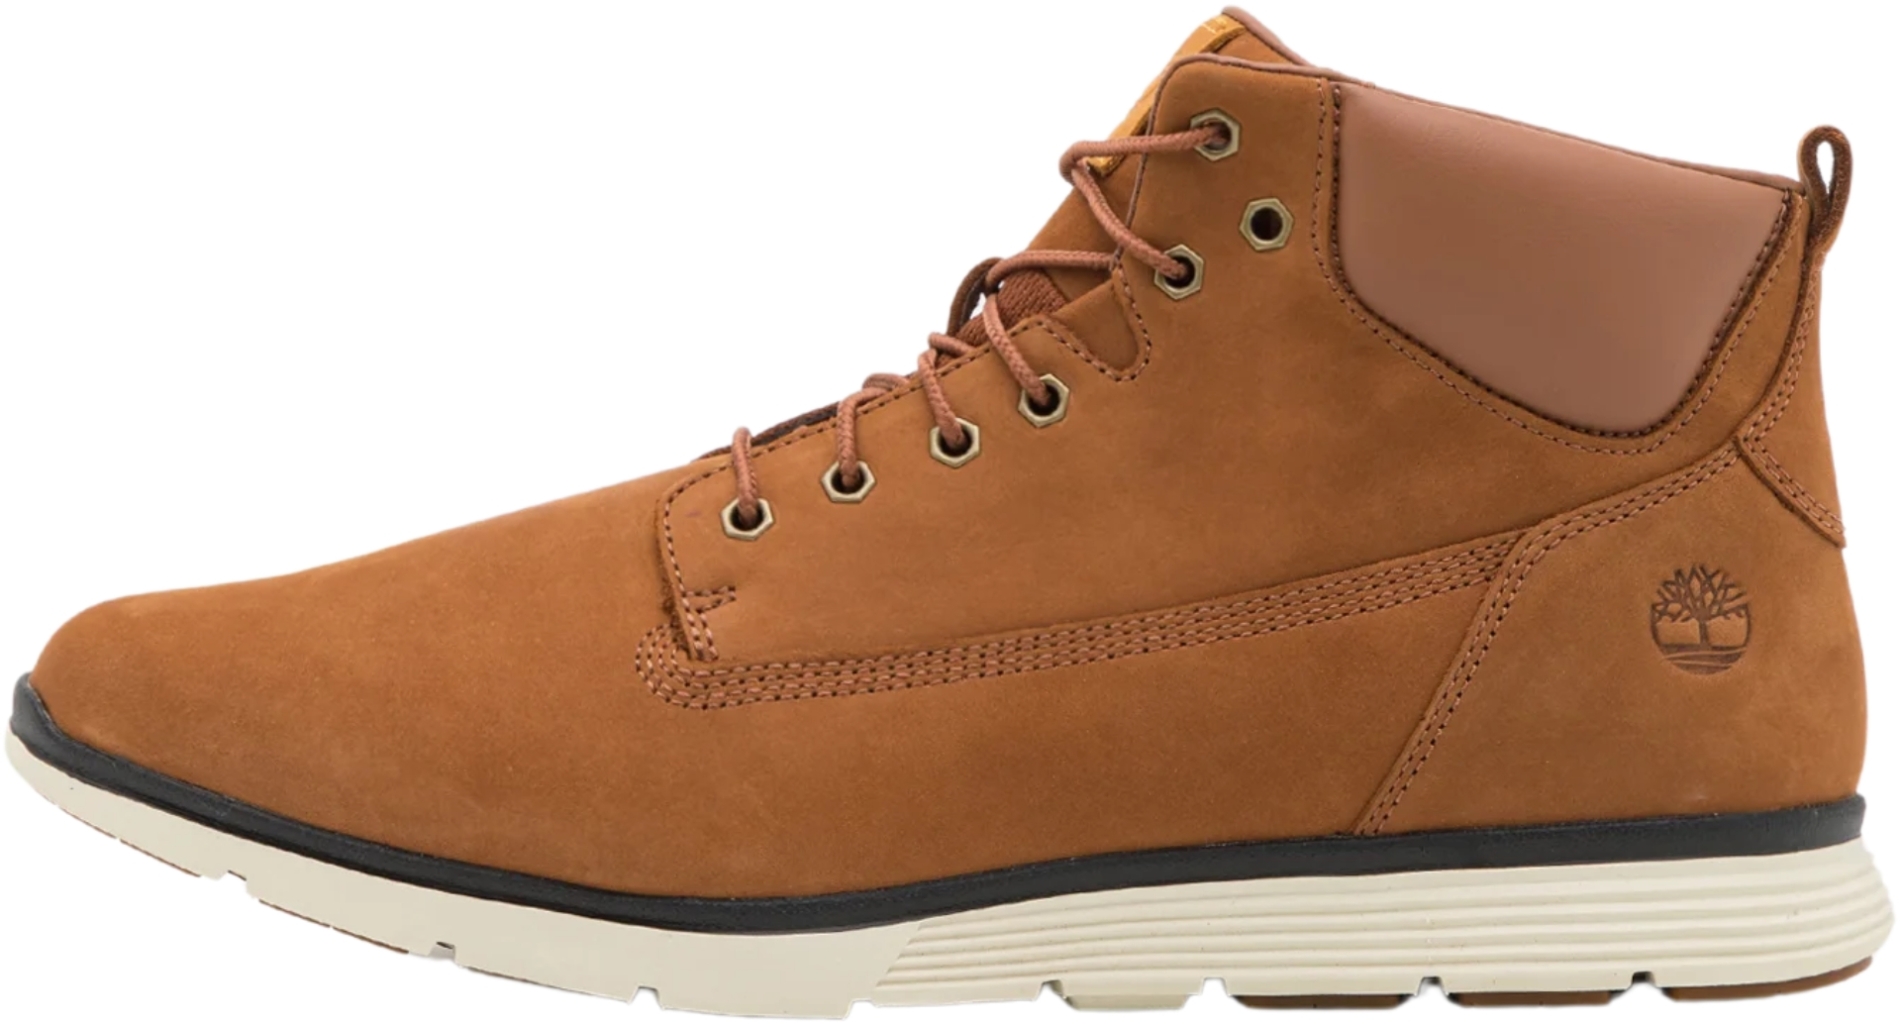 Worden cultuur bewondering Timberland Killington Chukka Sneaker Boots Review, Facts, Comparison |  RunRepeat